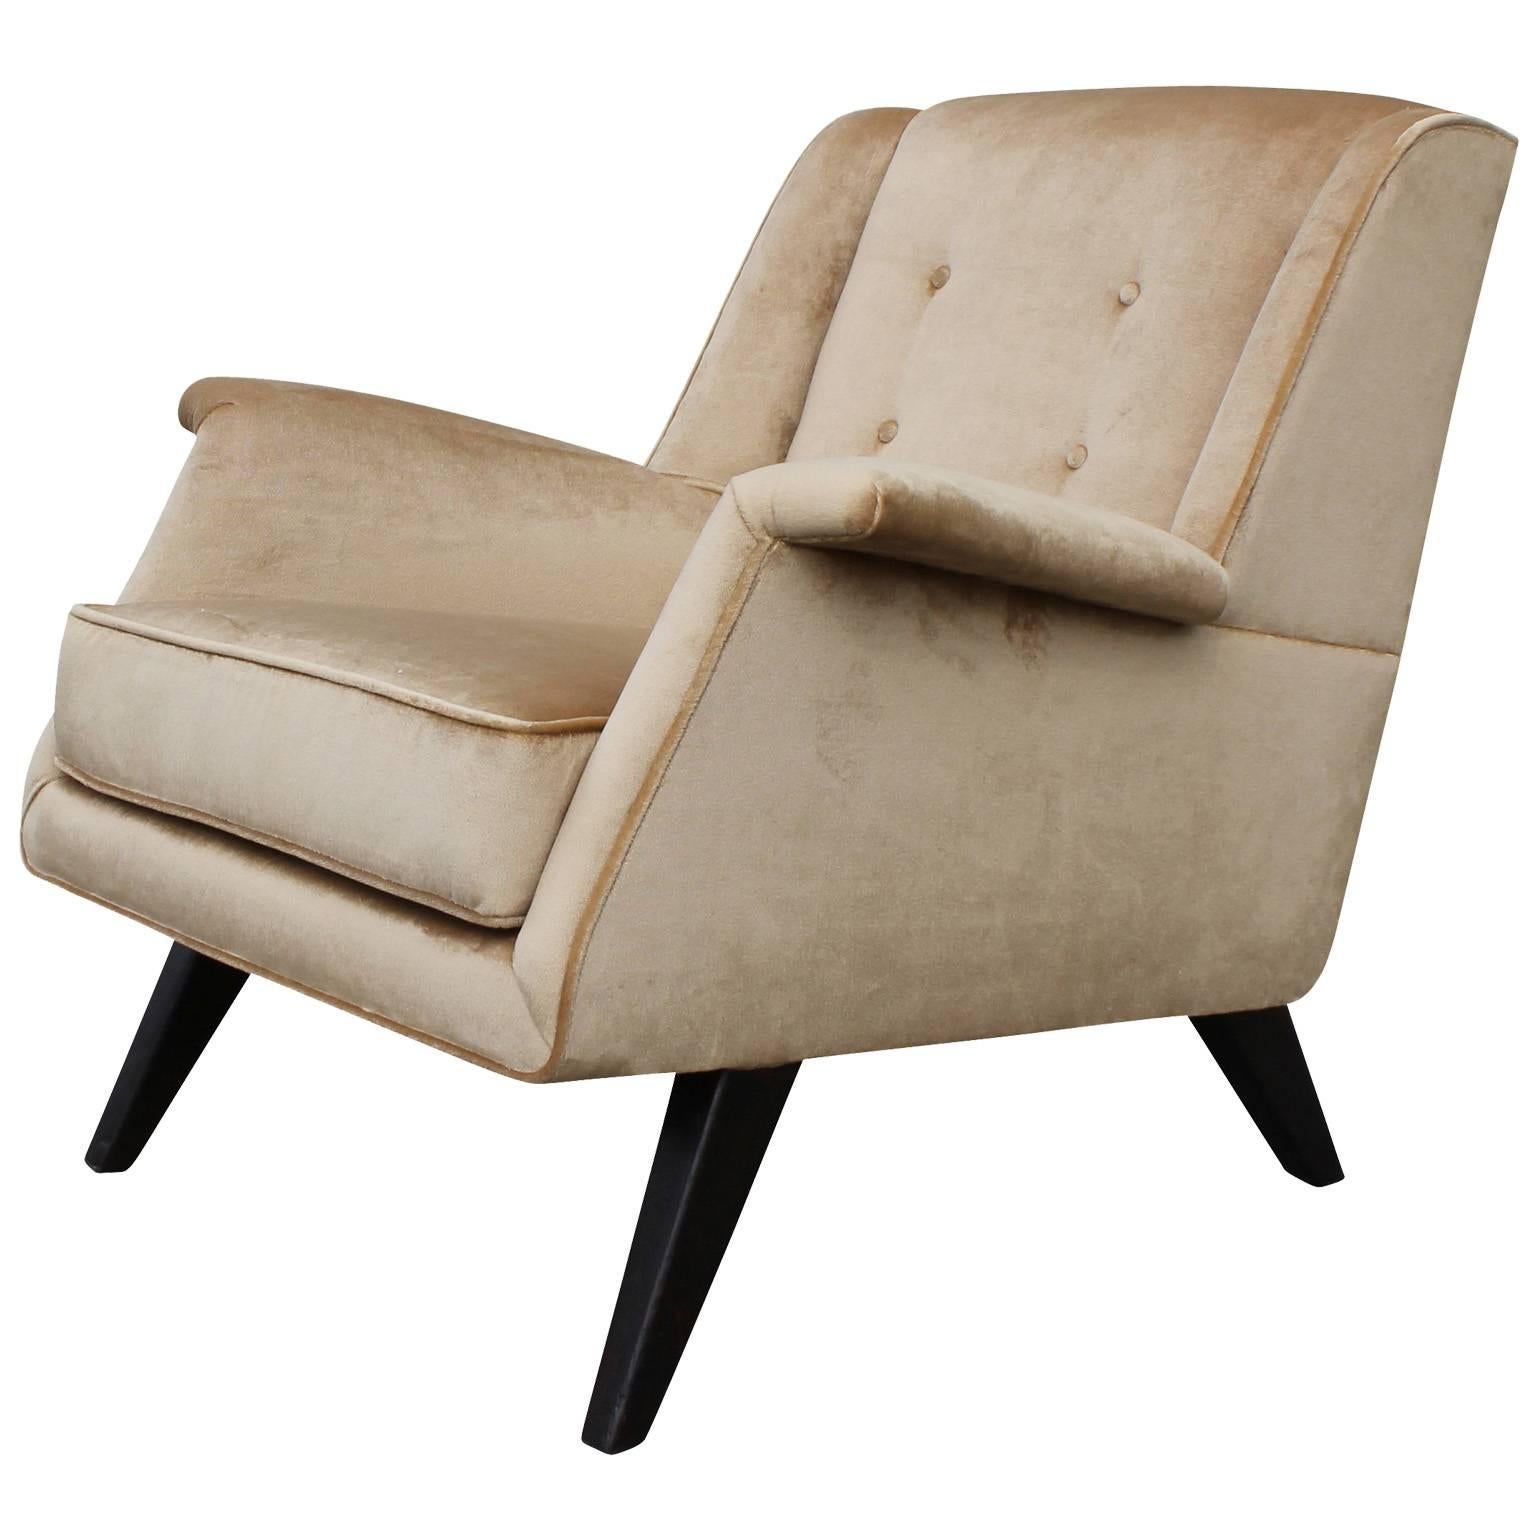 European Pair of Modern Velvet Italian Sculptural Lounge Chairs